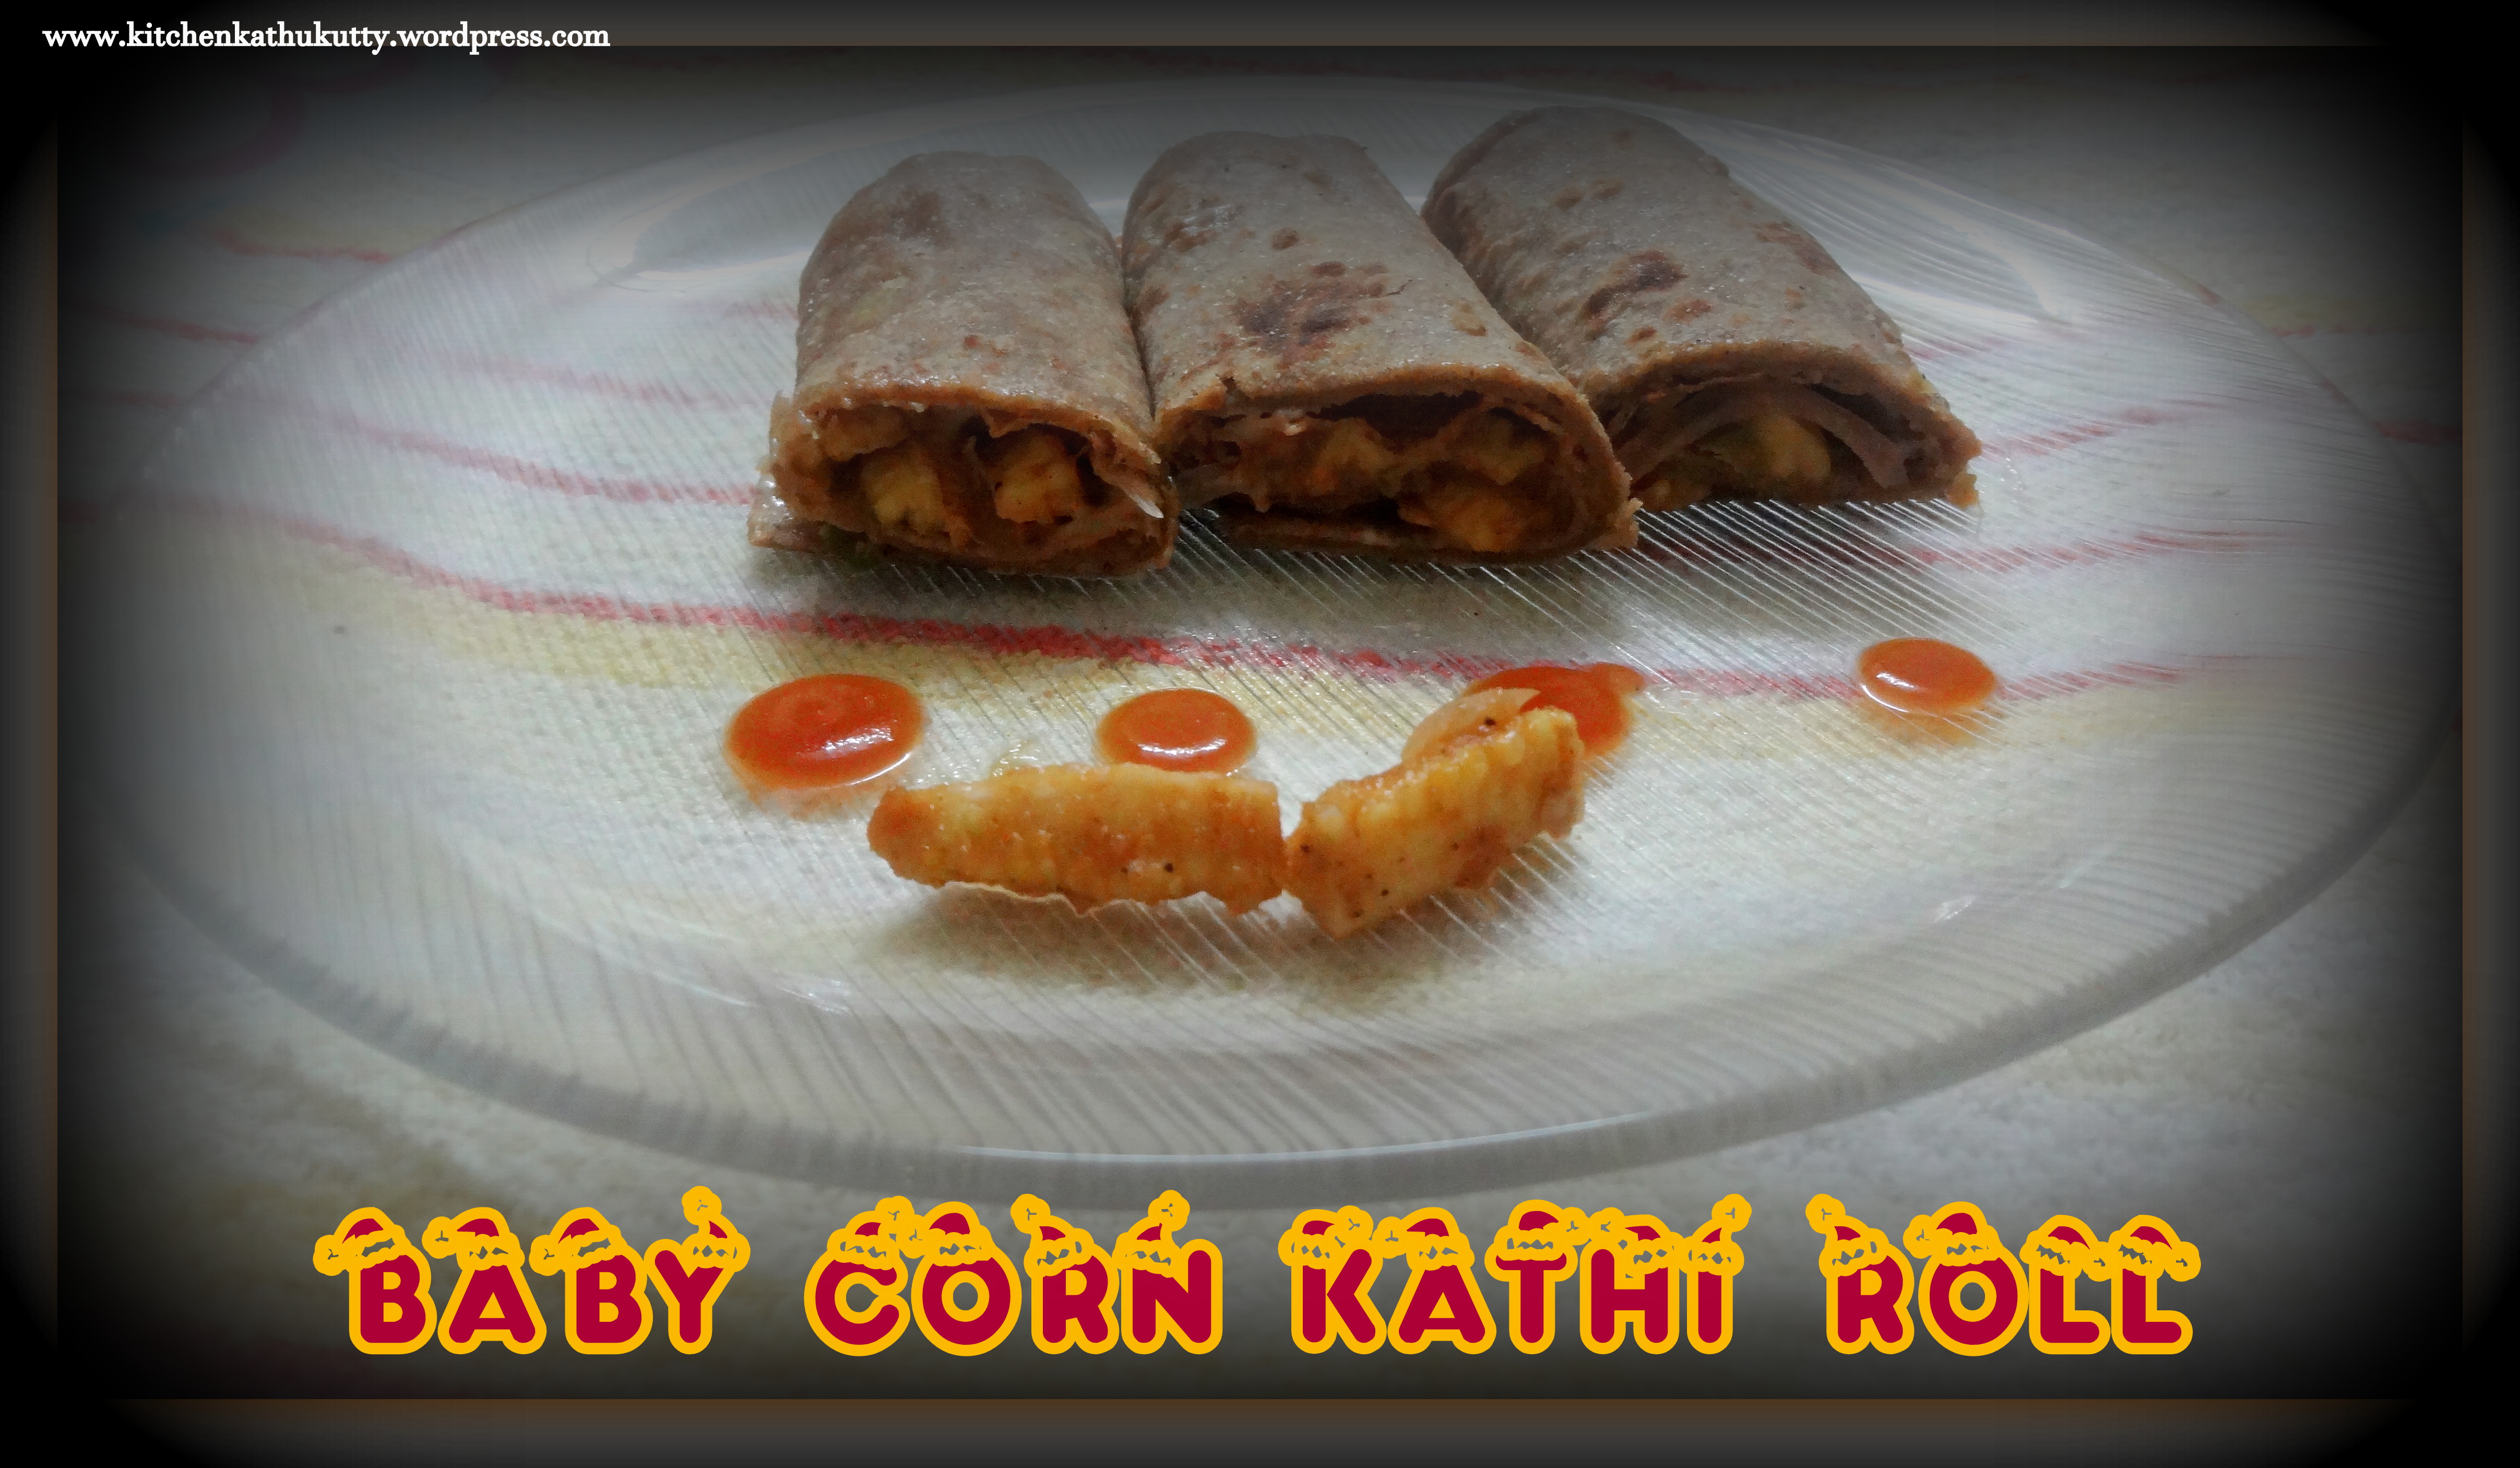 baby corn kathi roll.JPG